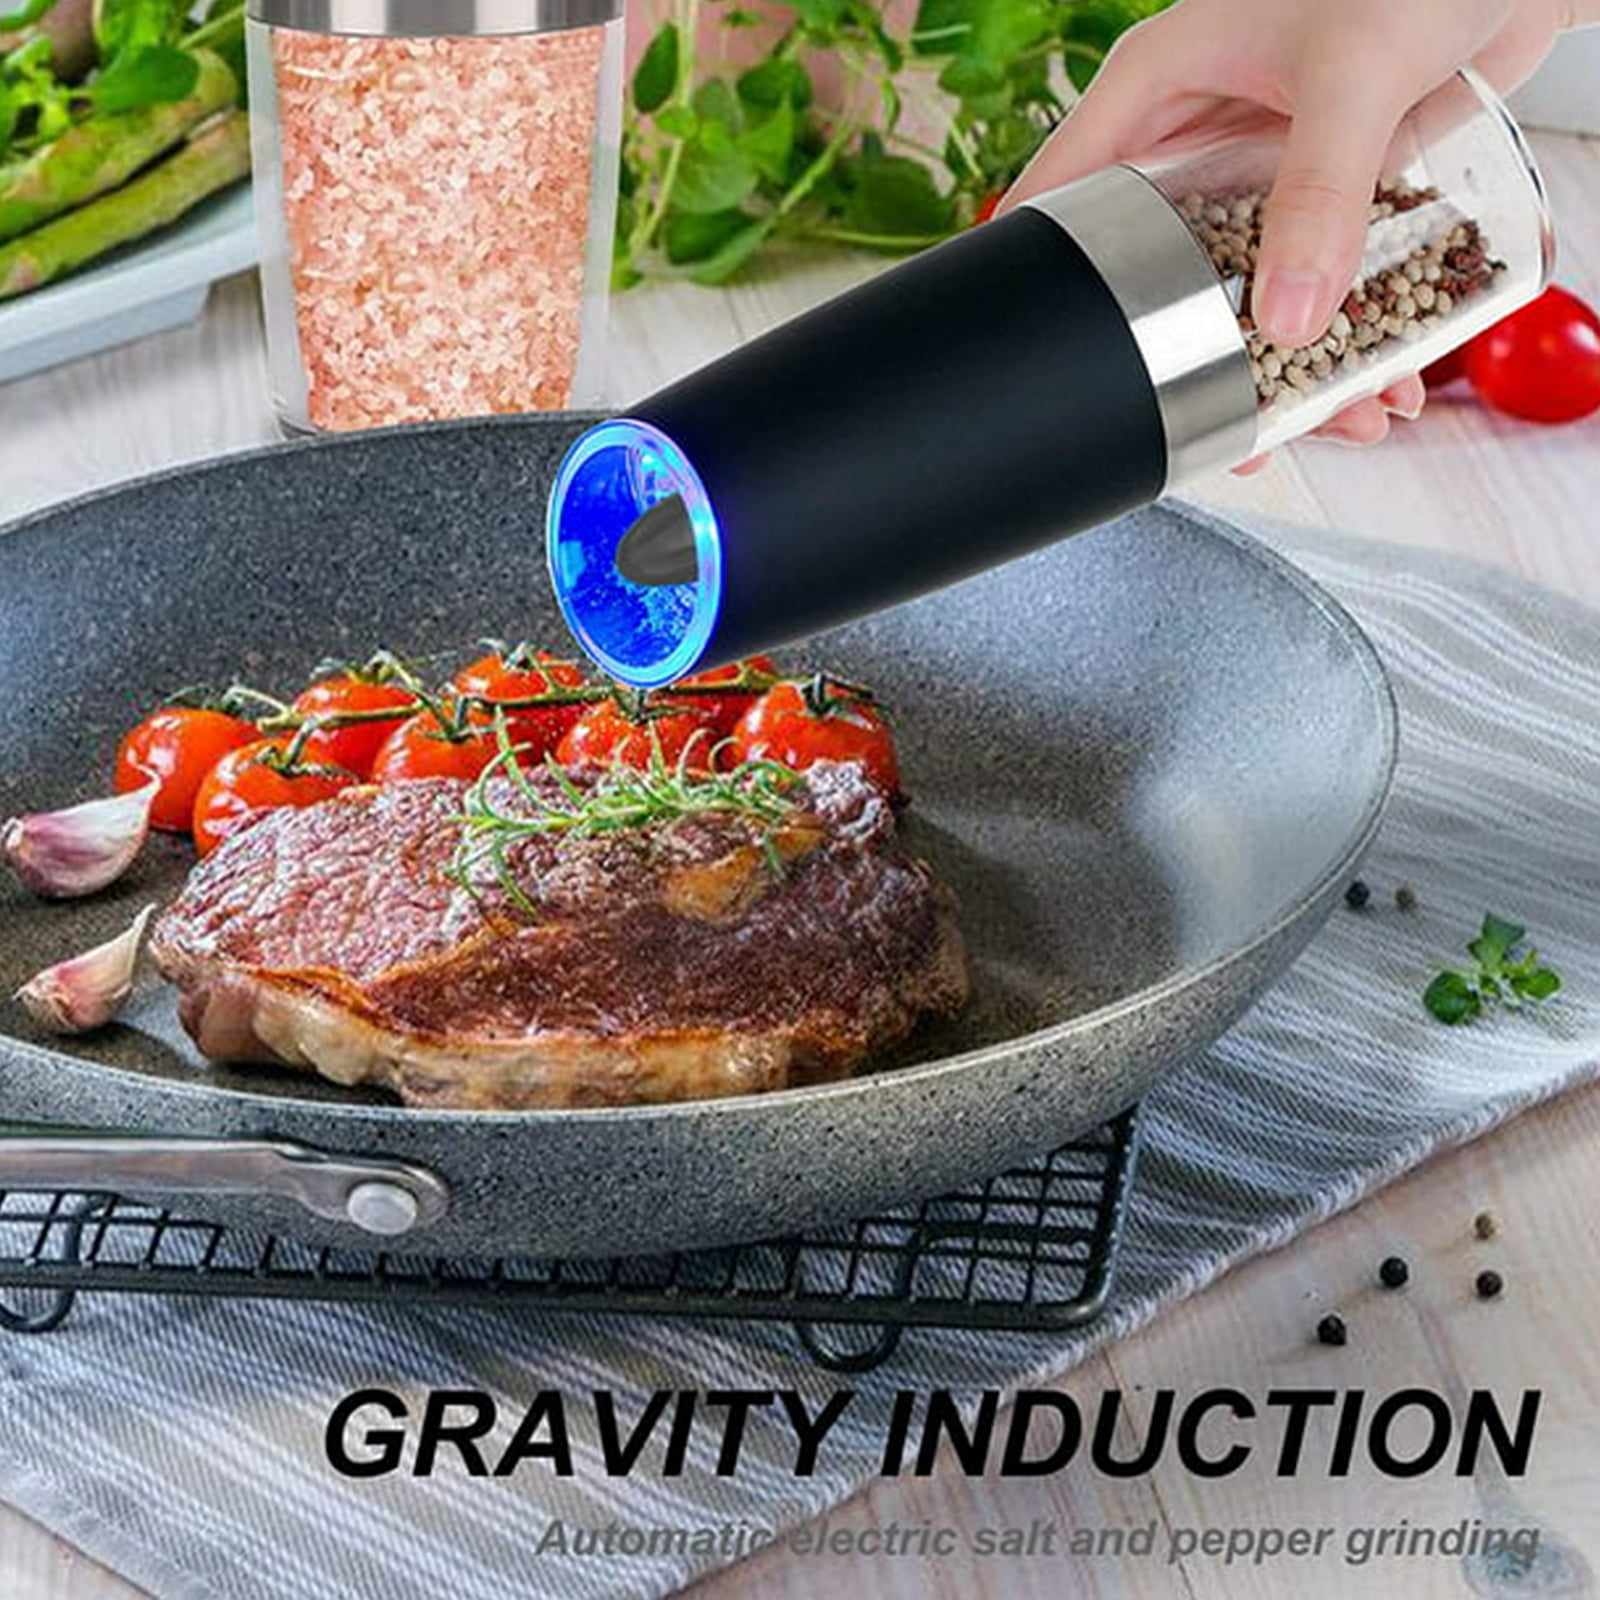 Duratione Automatic Electric Gravity Induction Salt / Pepper Grinder -  Lulunami